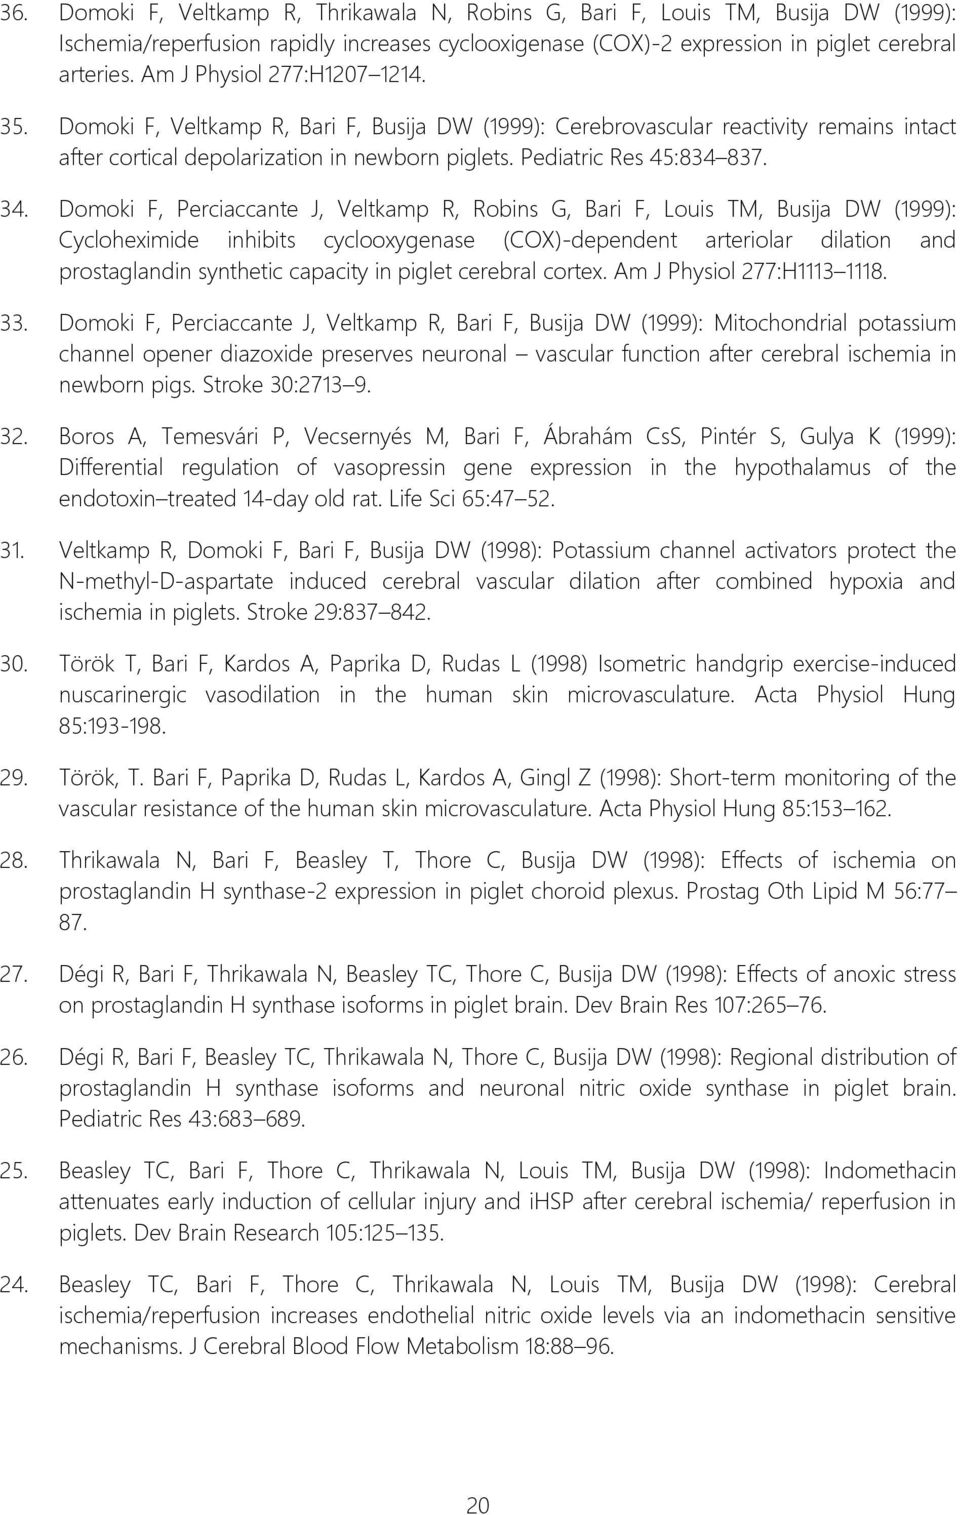 34. Domoki F, Perciaccante J, Veltkamp R, Robins G, Bari F, Louis TM, Busija DW (1999): Cycloheximide inhibits cyclooxygenase (COX)-dependent arteriolar dilation and prostaglandin synthetic capacity